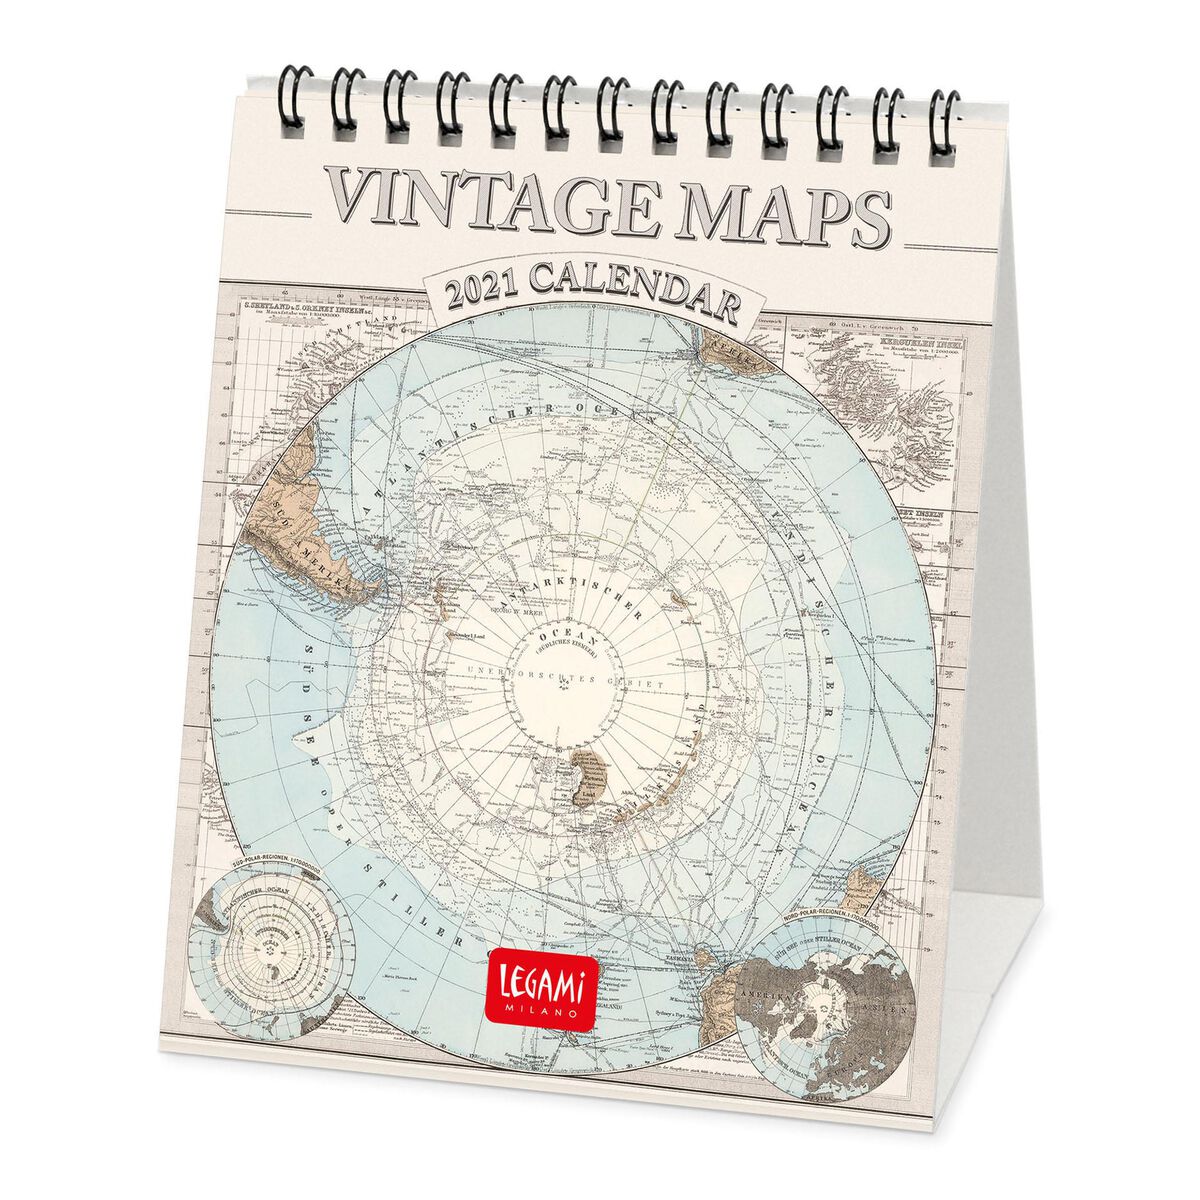 CALENDARIO VINTAGE MAPS 2021- 12x14,5cm